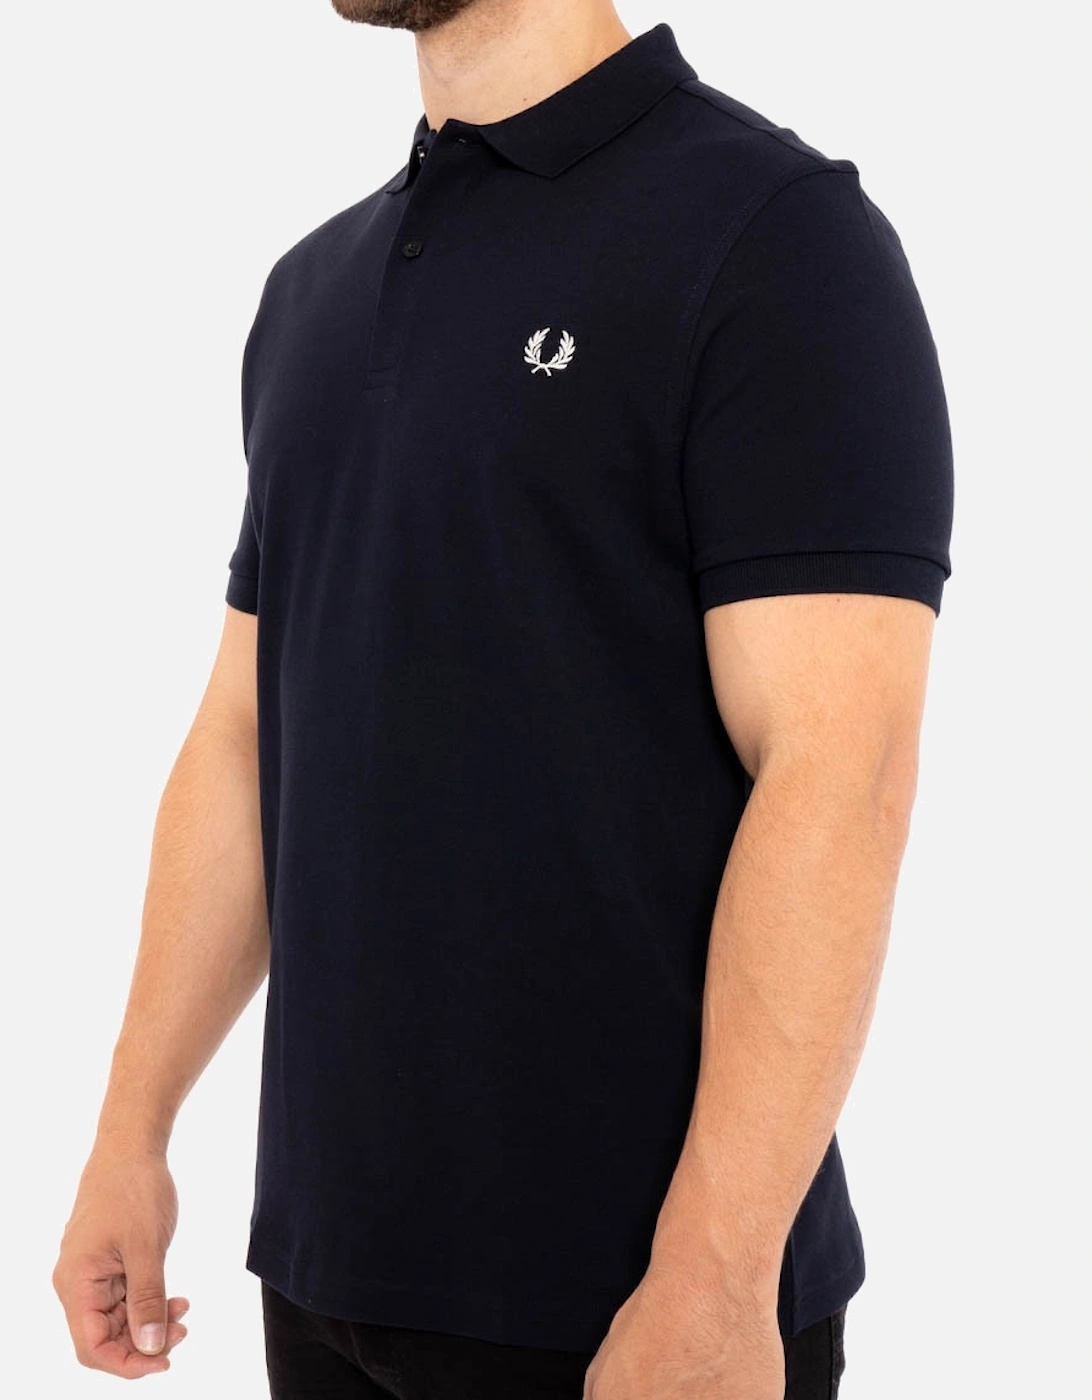 Mens Plain Polo Shirt (Navy)